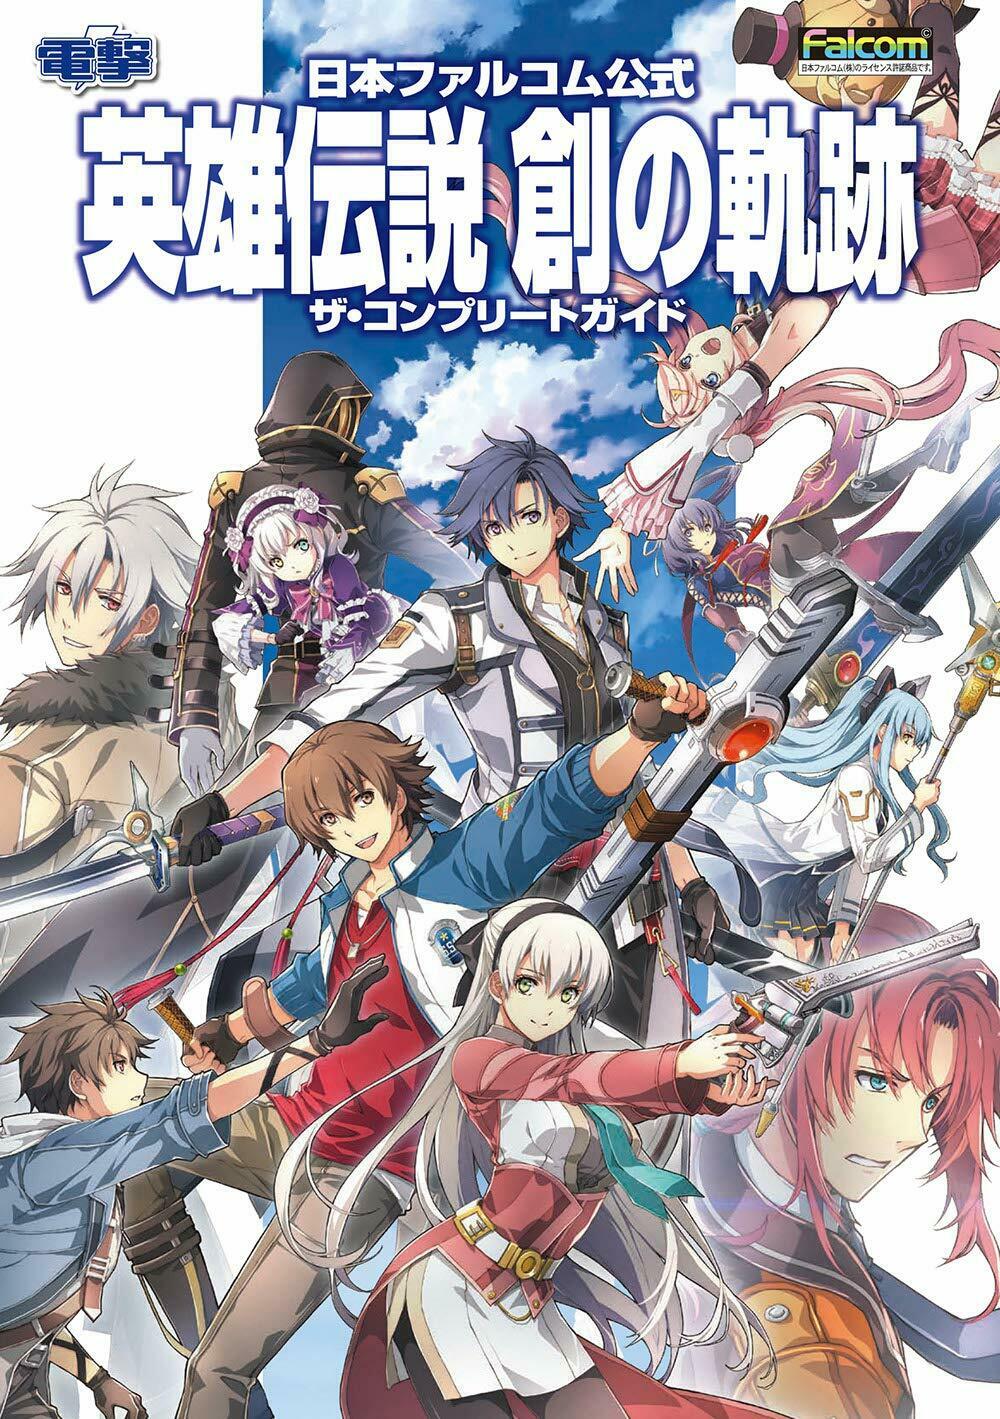 NEW The Legend of Heroes Hajimari no Kiseki Official Guide Book | JAPAN Game